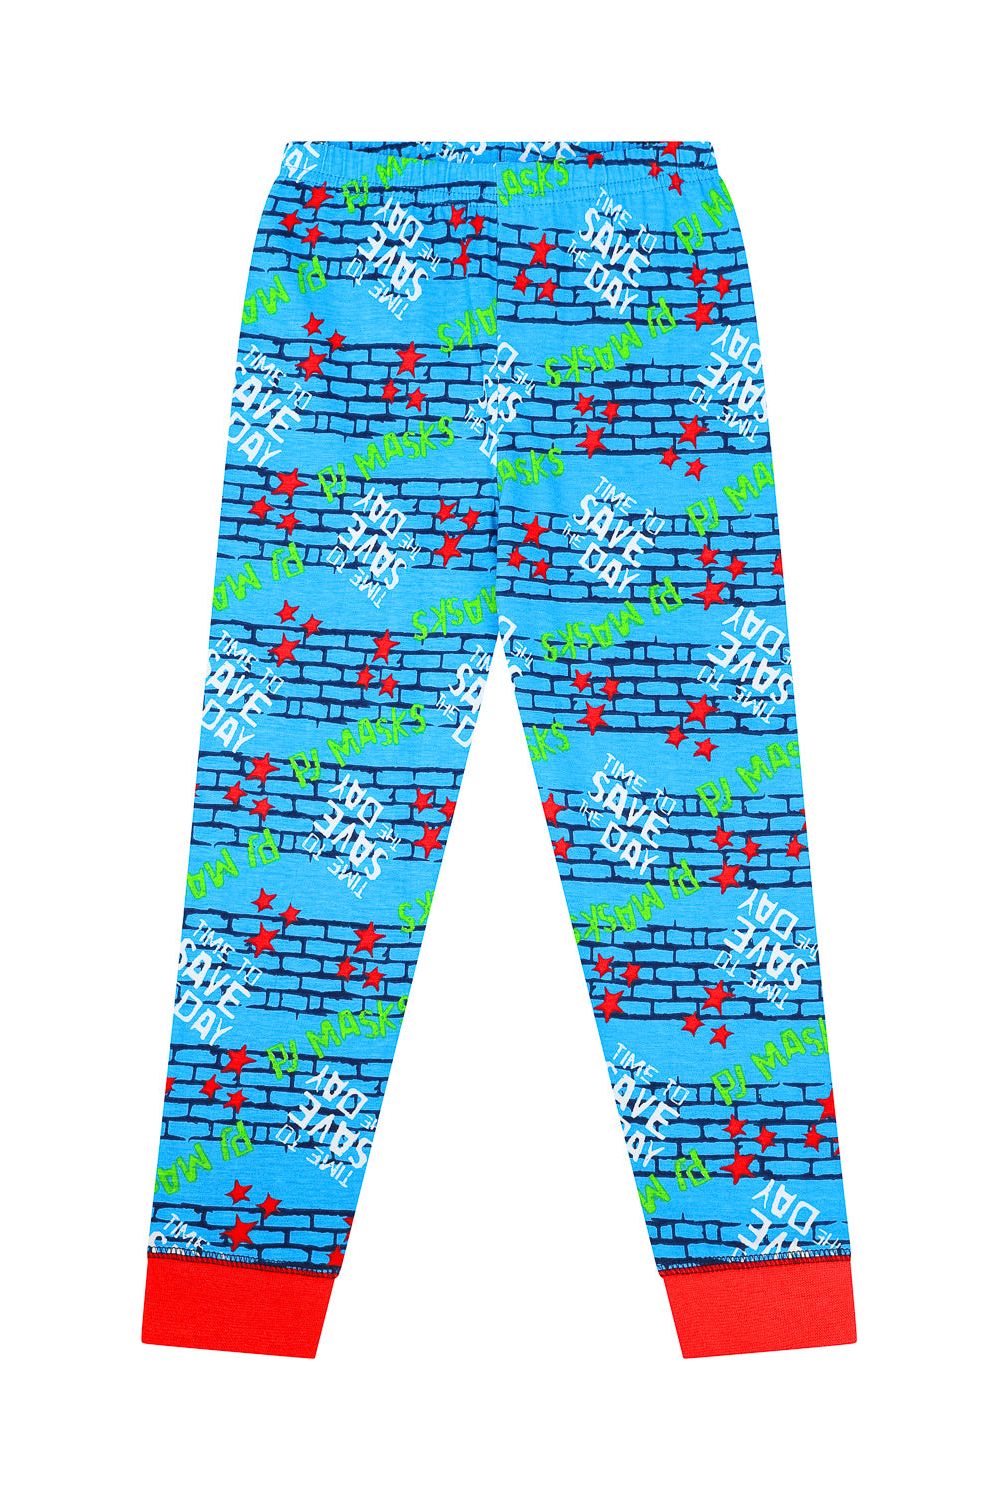 PJ Masks pyjama bottoms